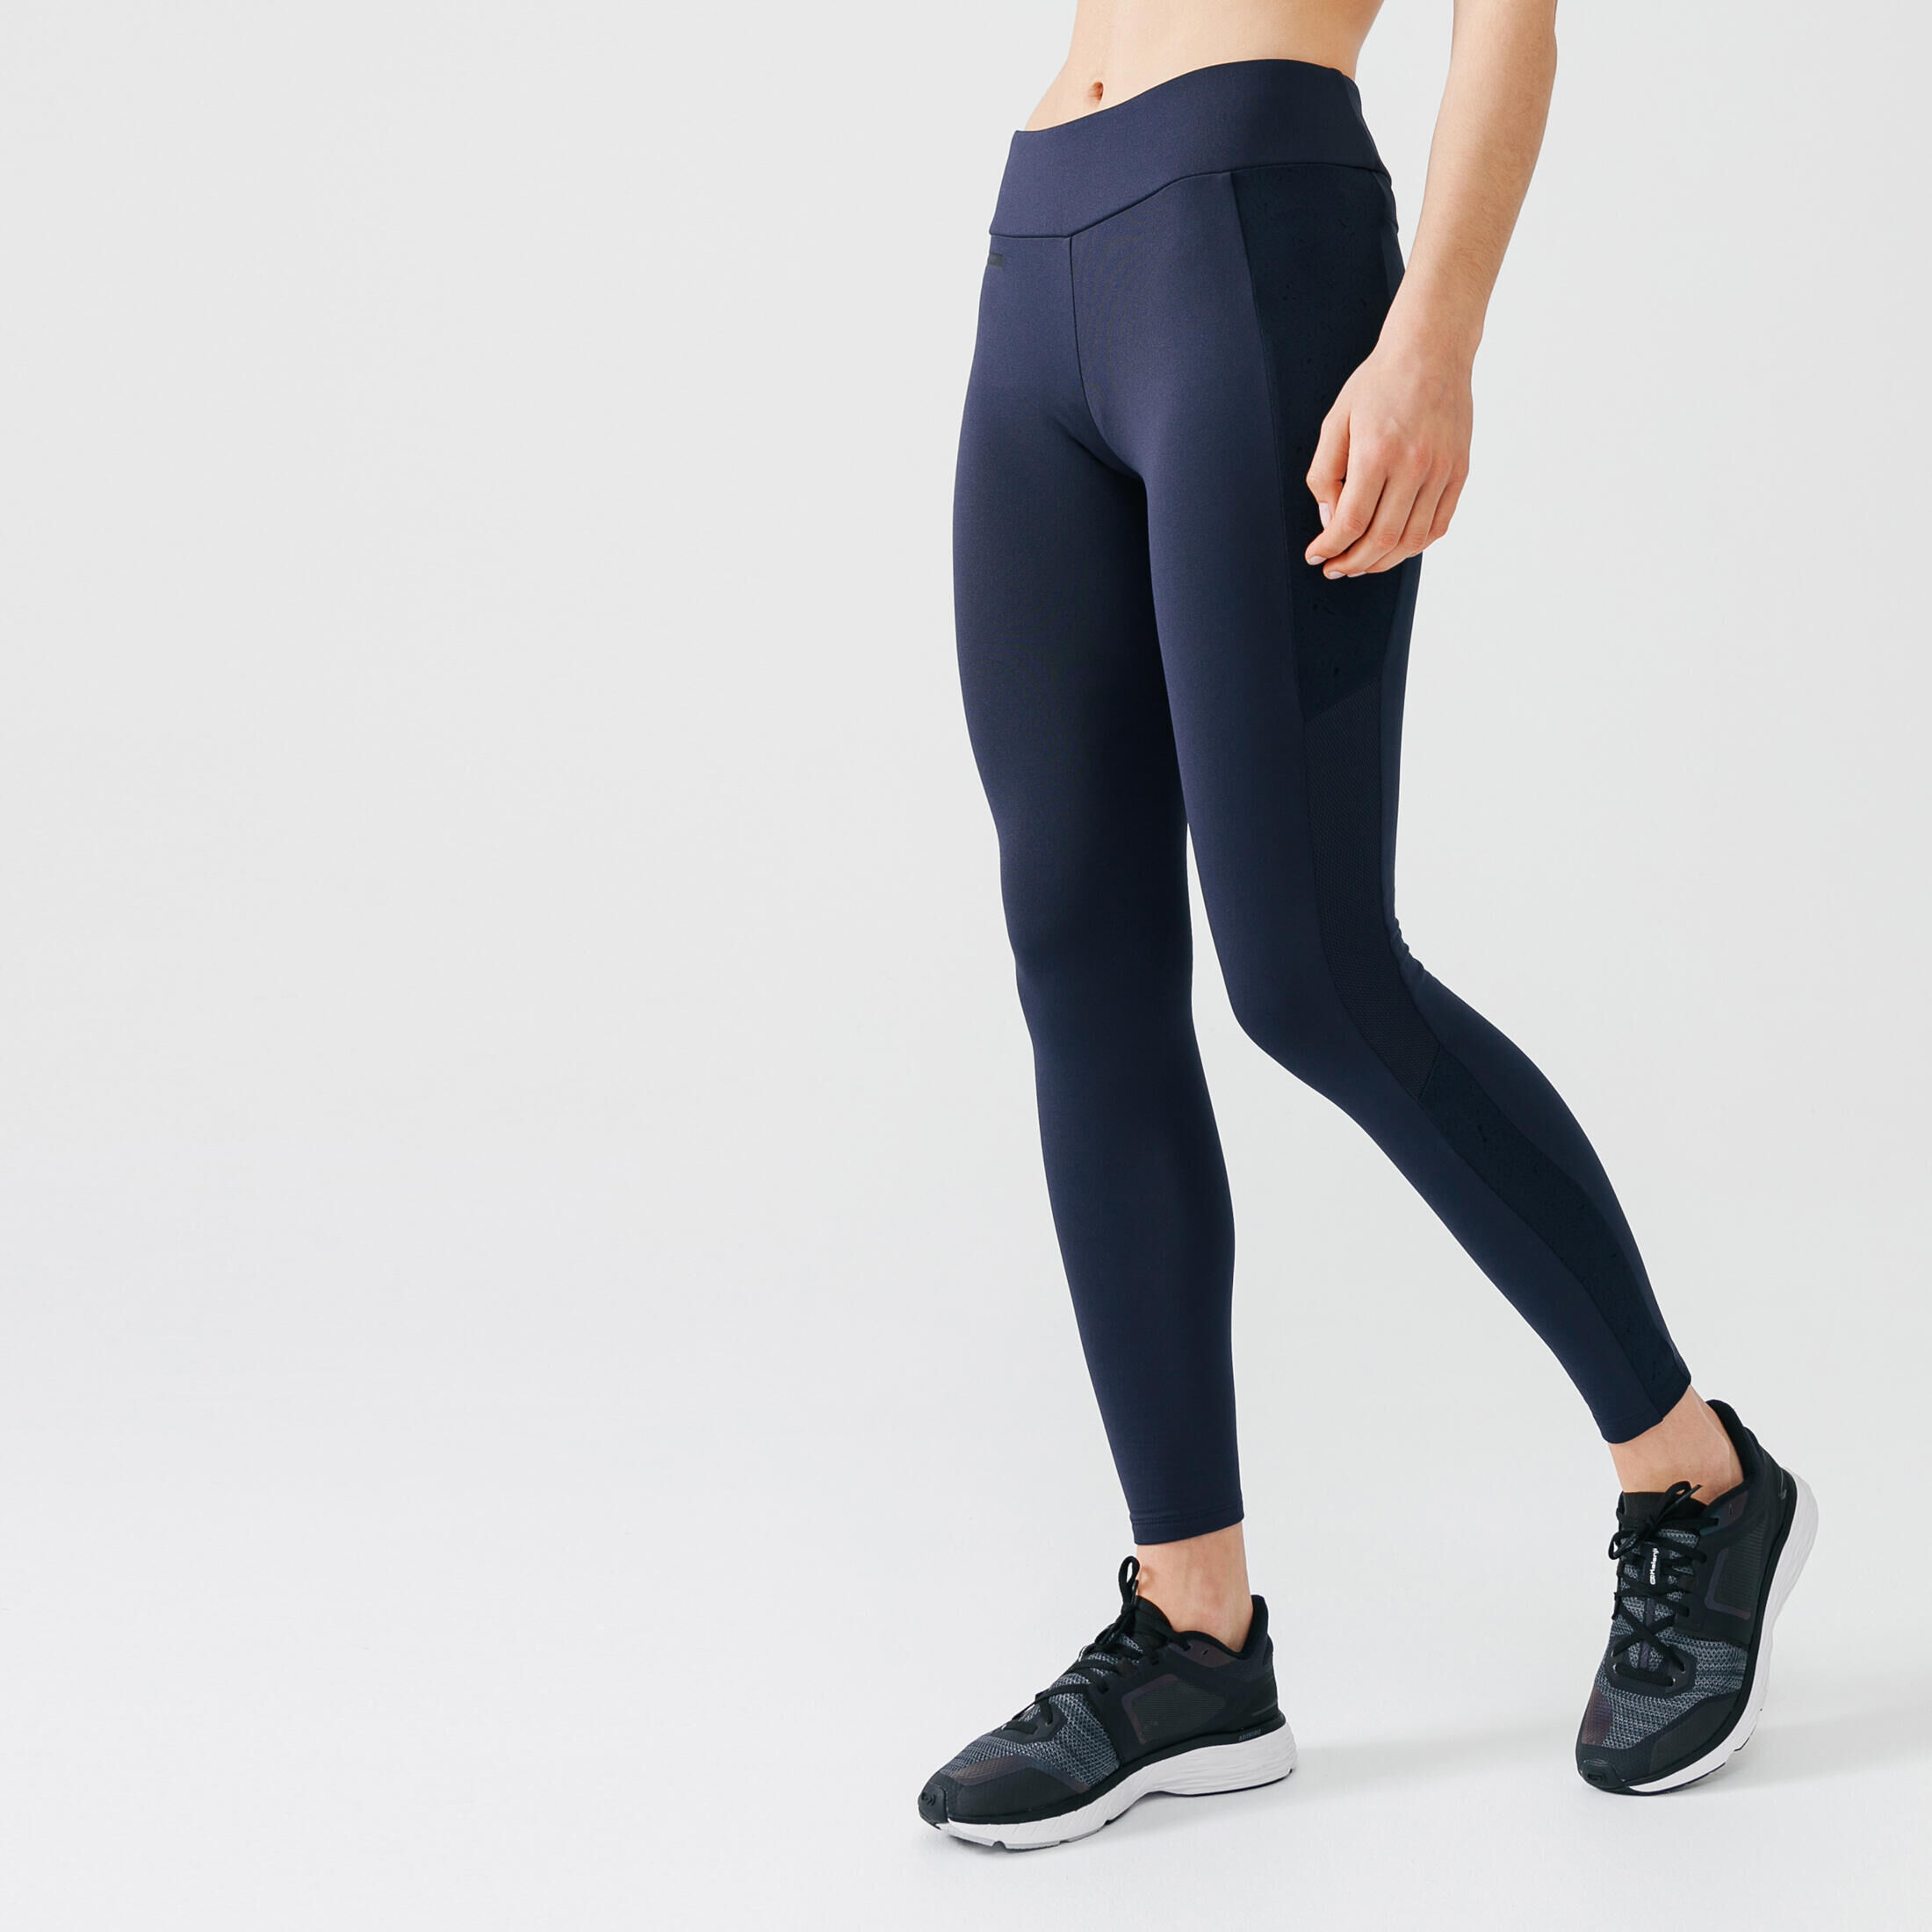 KALENJI Women's long running leggings Warm+ - dark blue